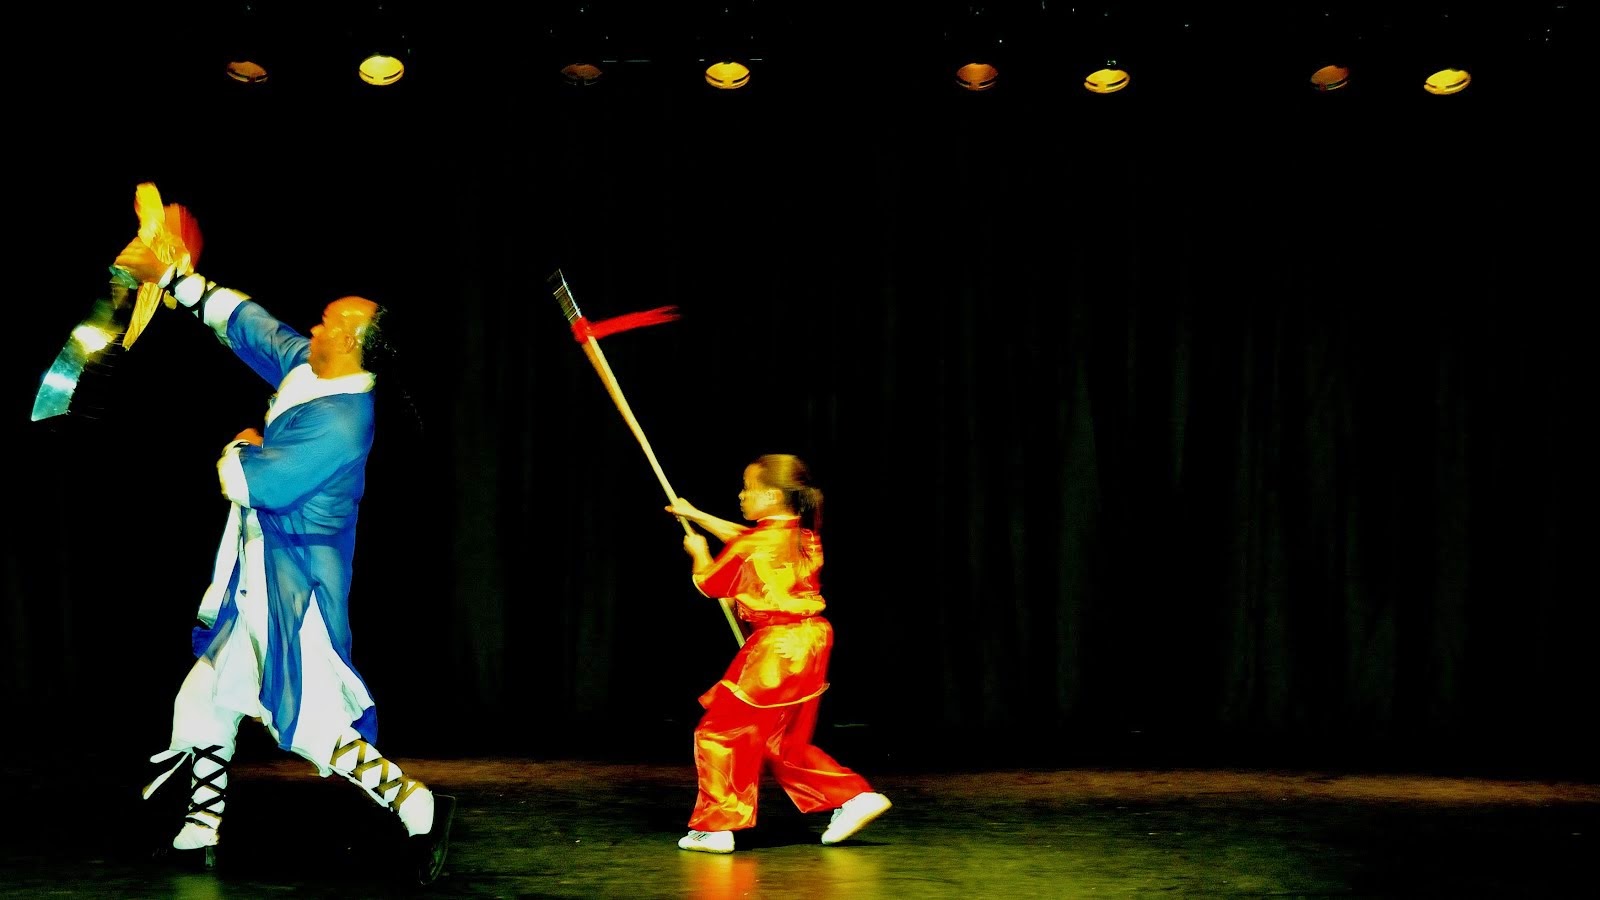 Wudang  Kung Fu "Clases" en guadalajara (Tai Chi Chuan)  en Guadalajara Maestro Senna y Paty Lee.